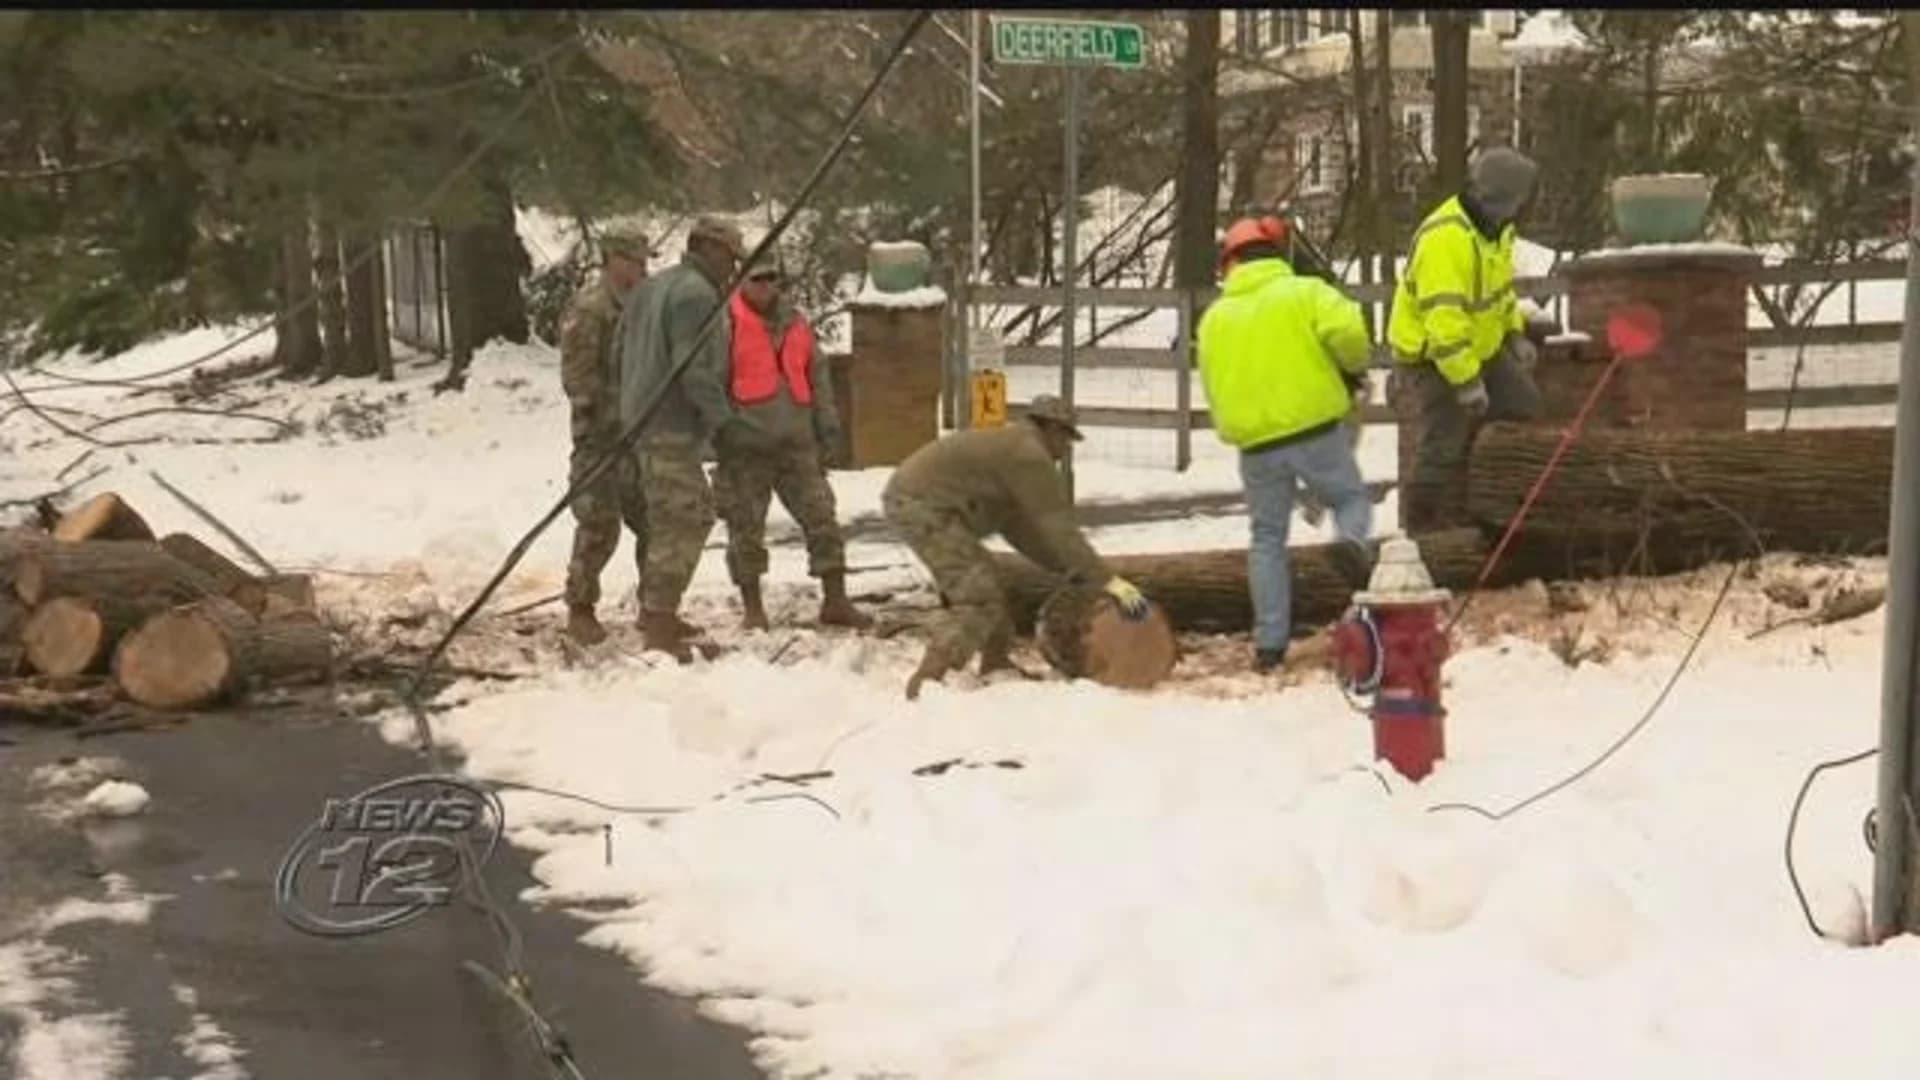 National Guardsmen deployed to help clear storm debris